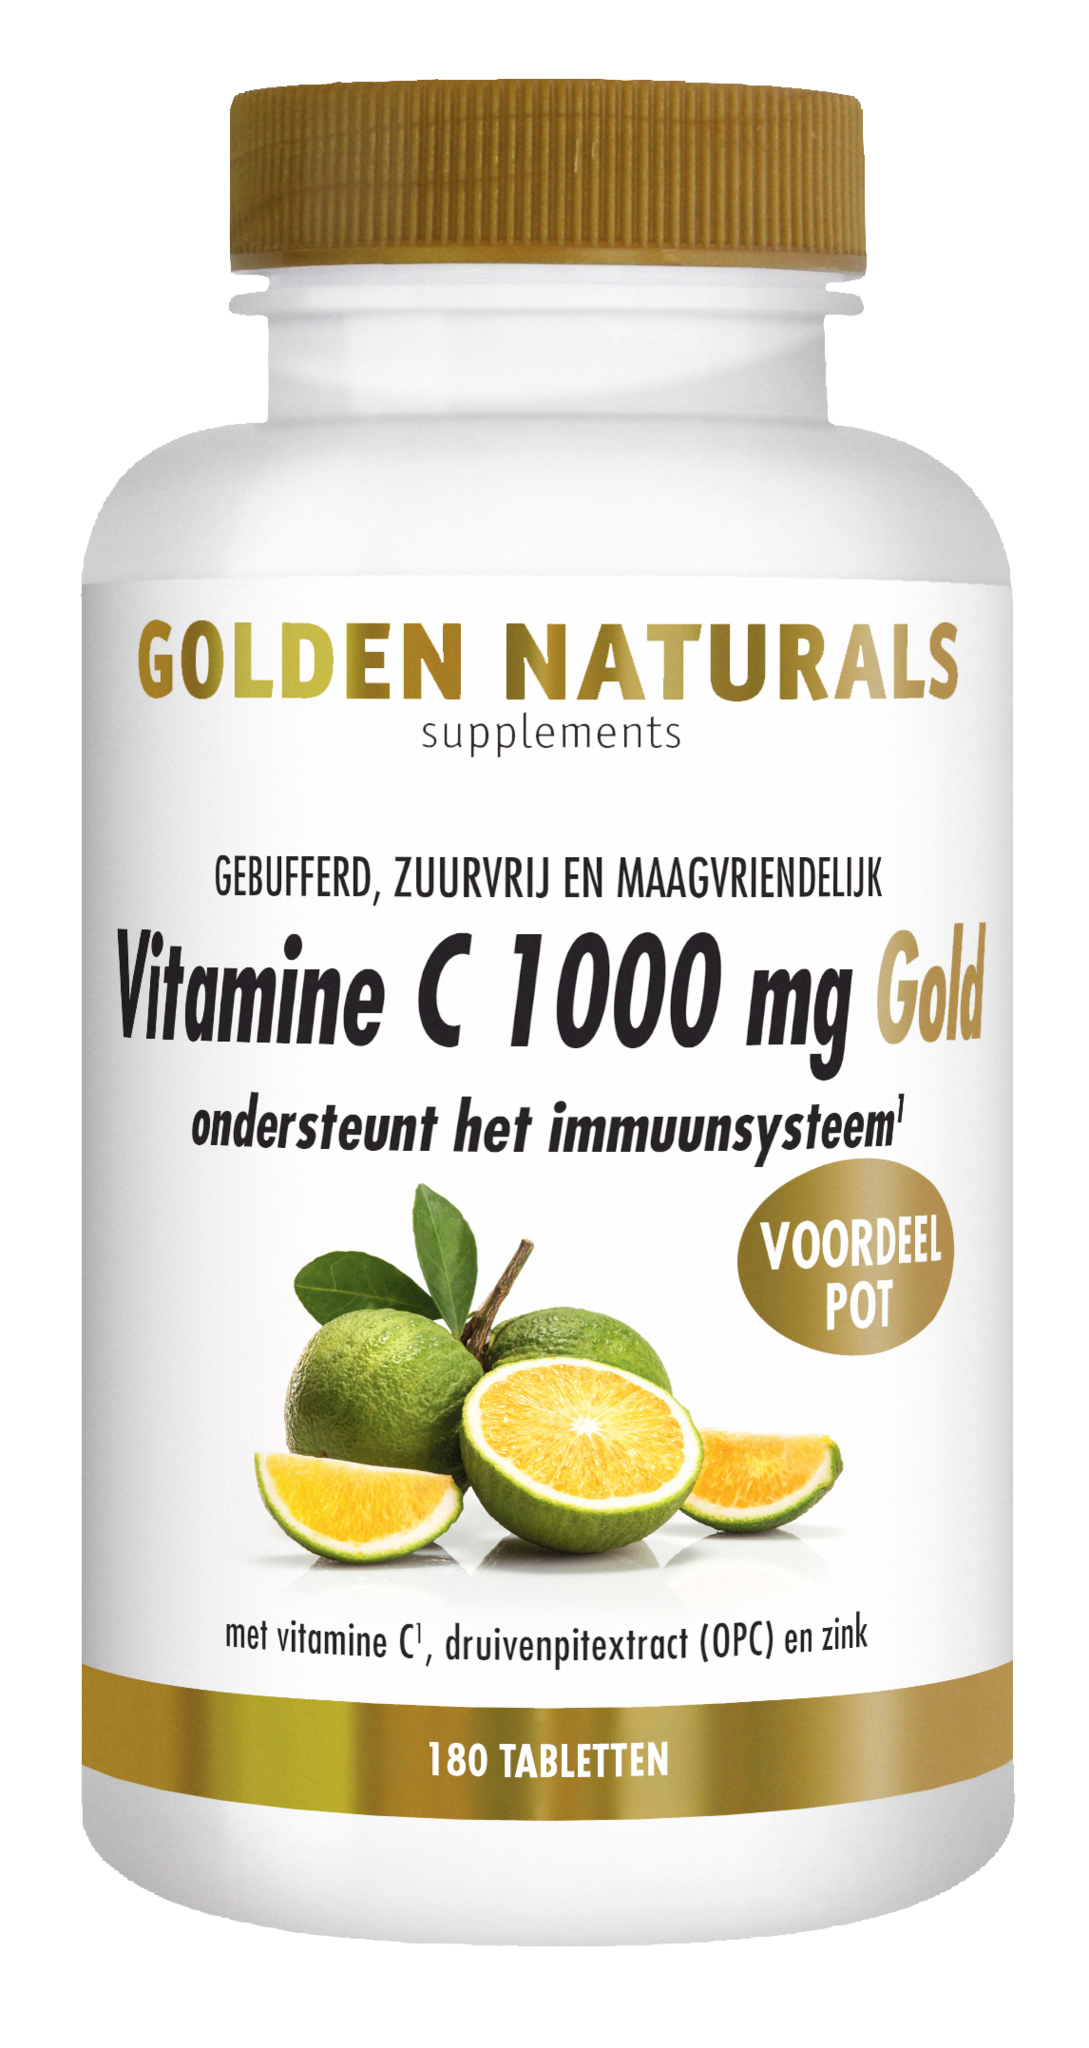 Golden Naturals Golden Naturals Vitamin C 1000 mg Gold vegan (180 Tabletten)